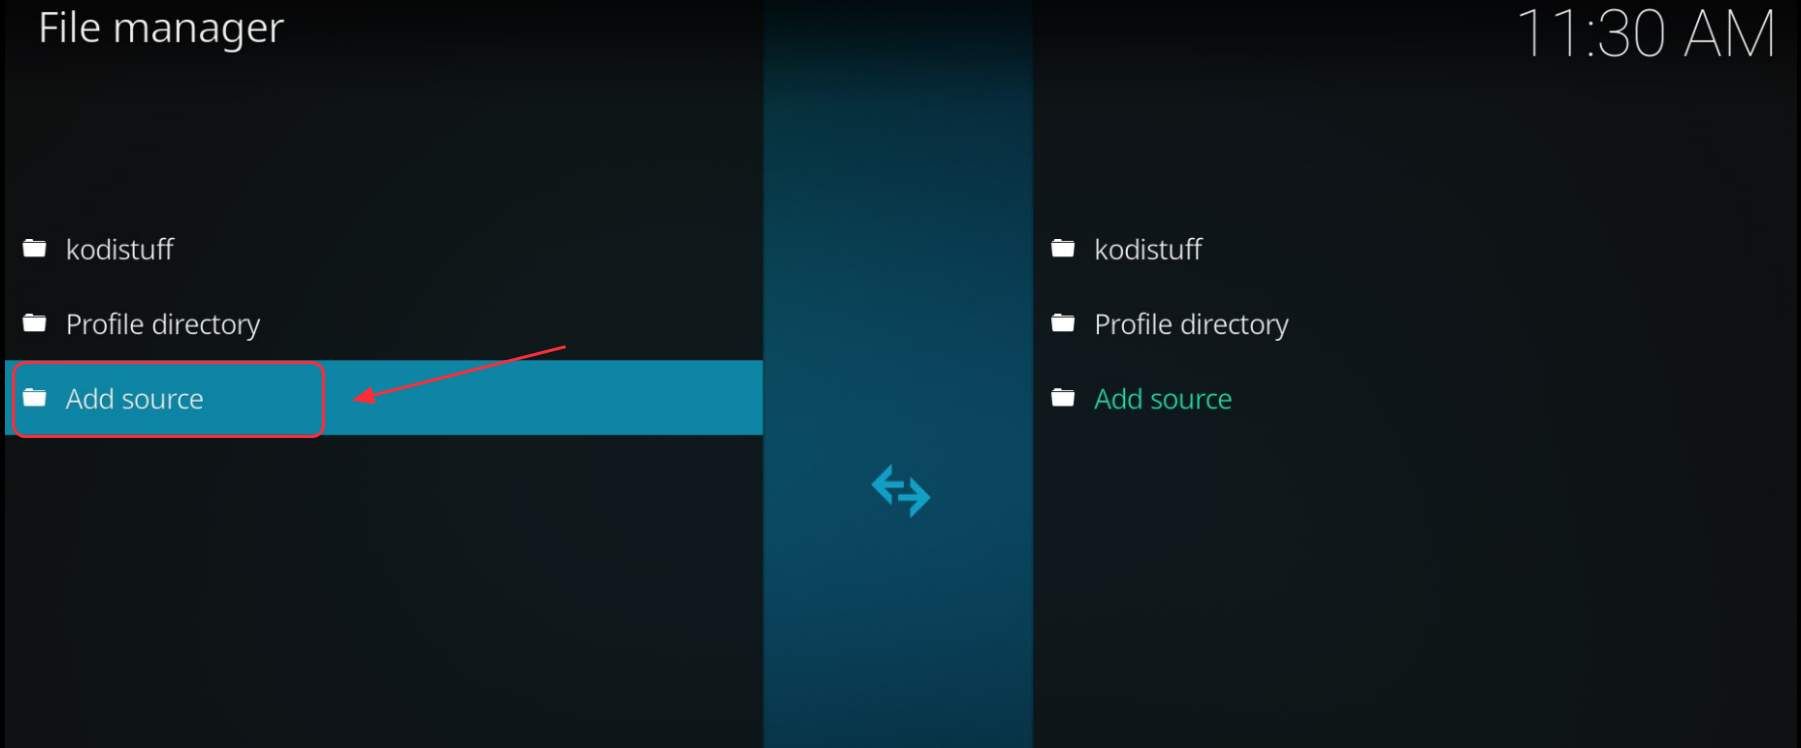 How To Fix Exodus Kodi not Working 